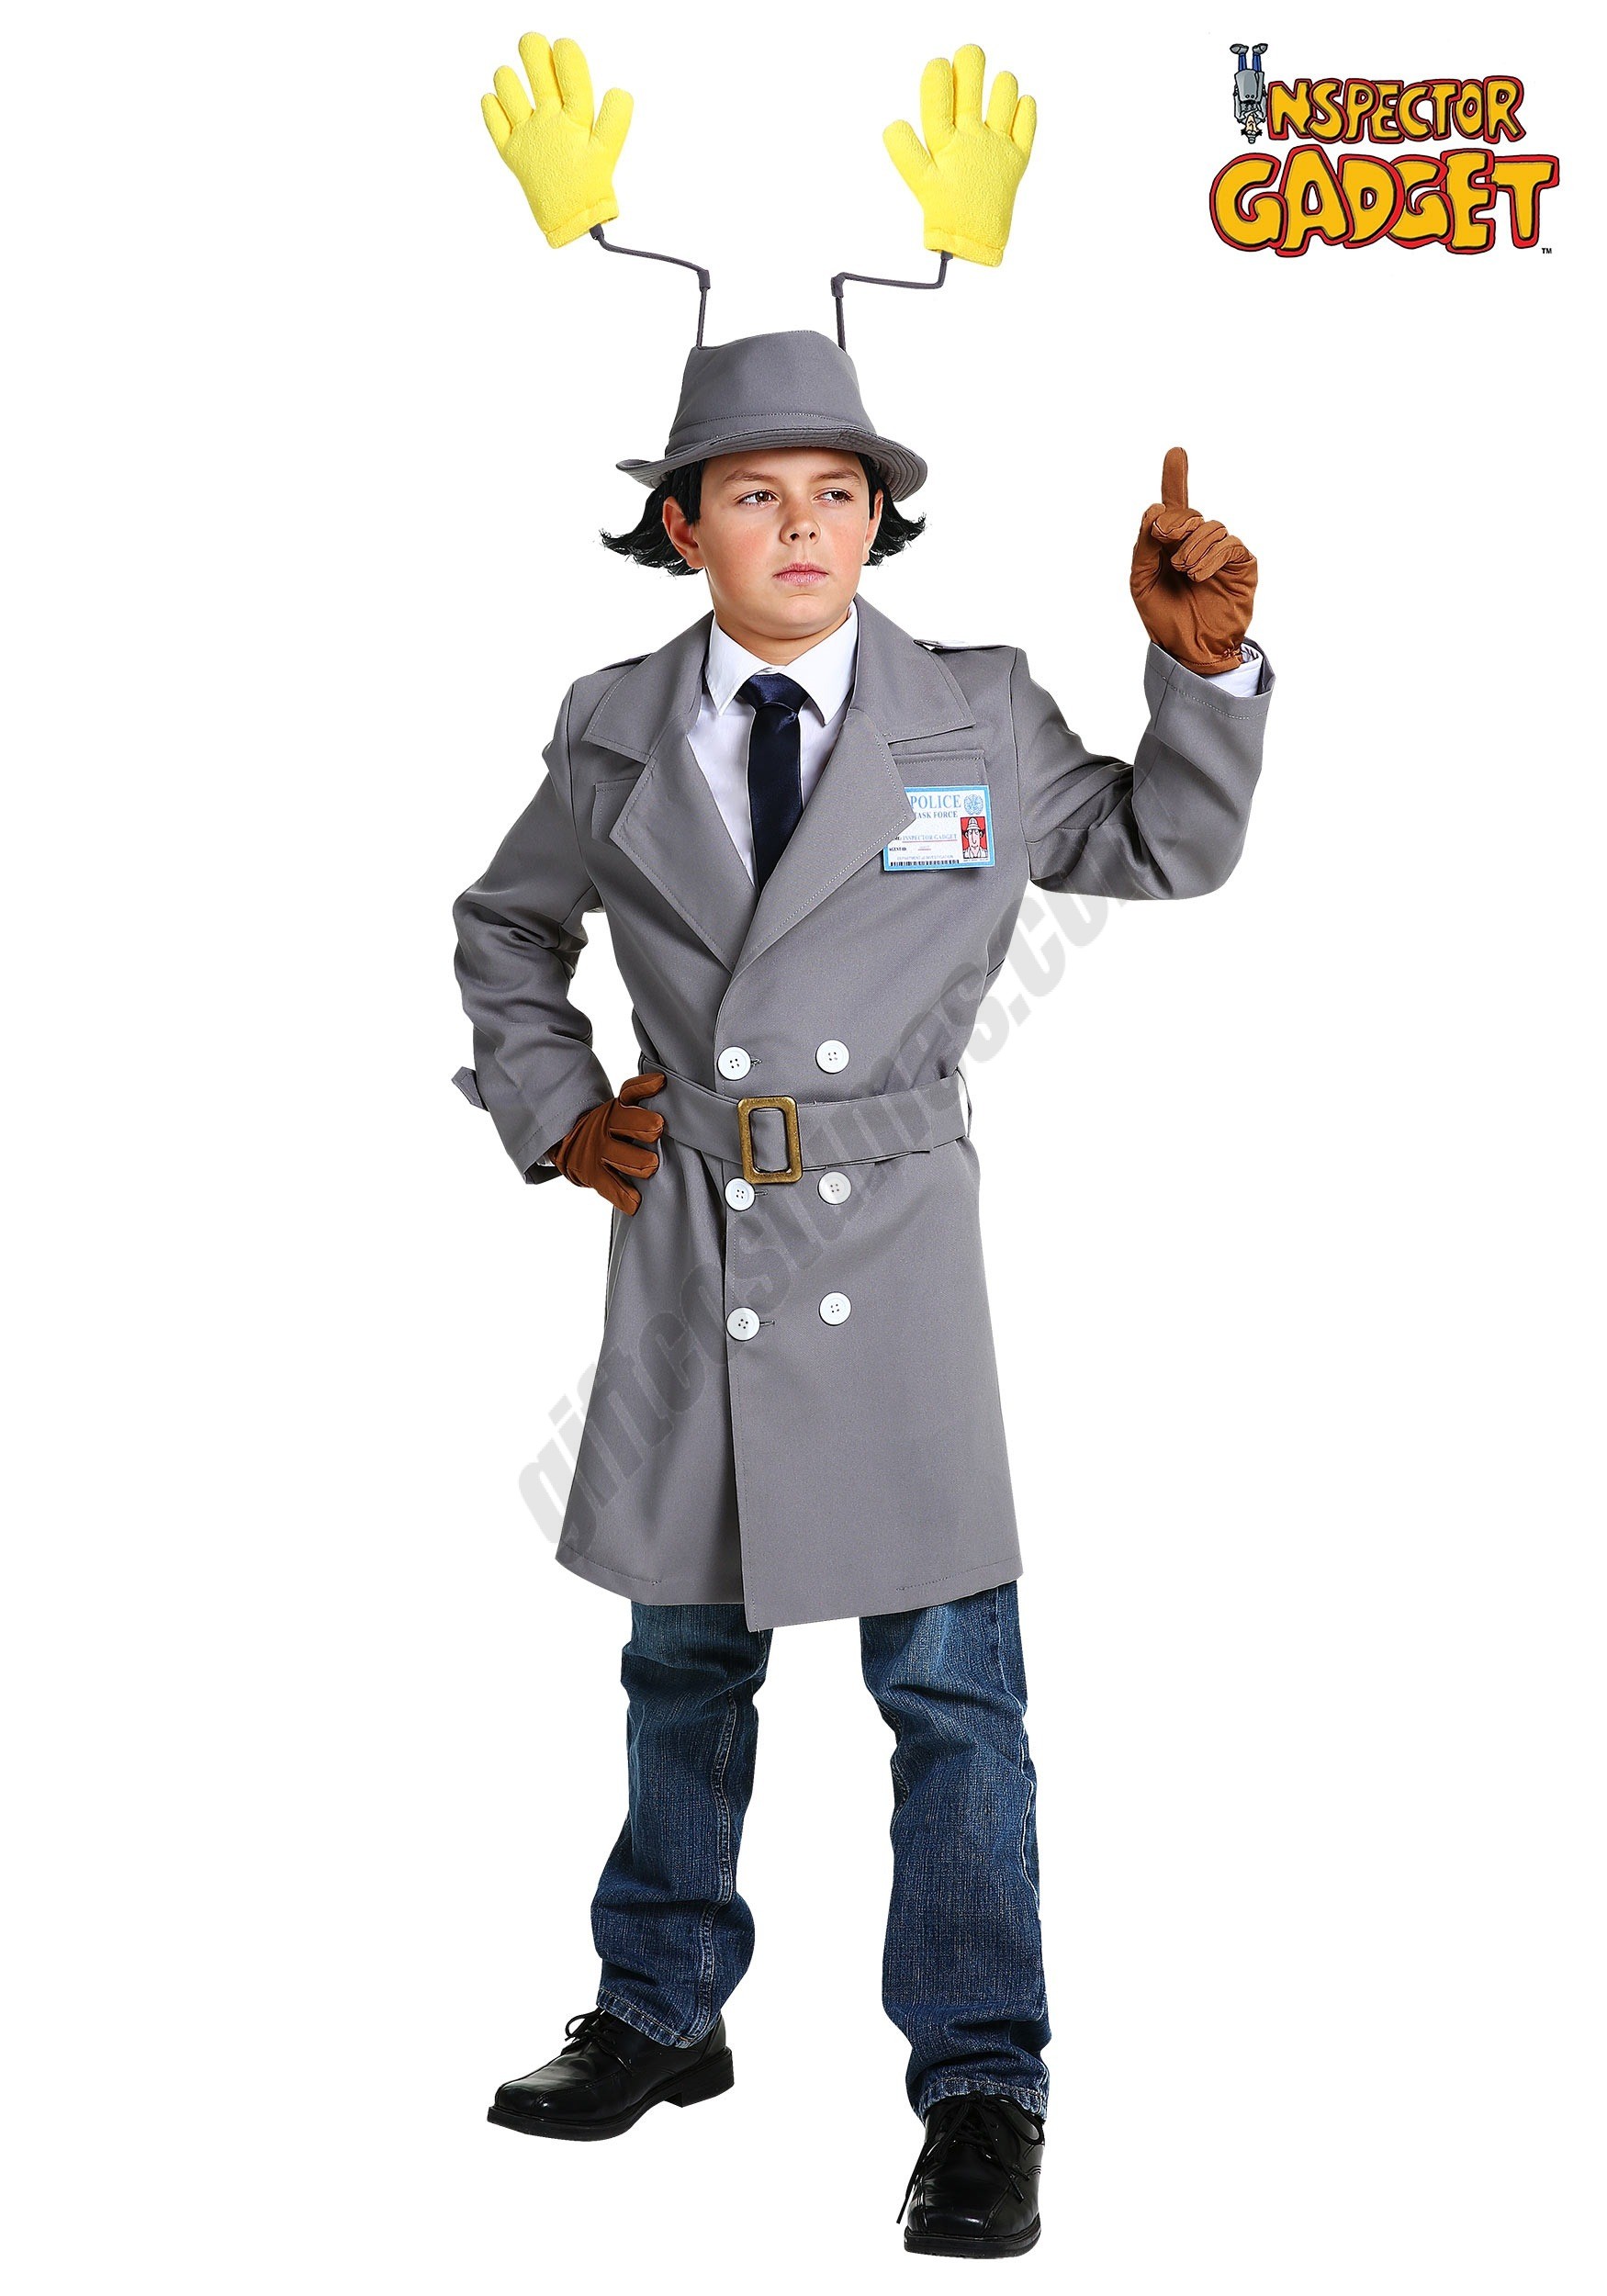 Inspector Gadget Boys Costume Promotions - Inspector Gadget Boys Costume Promotions